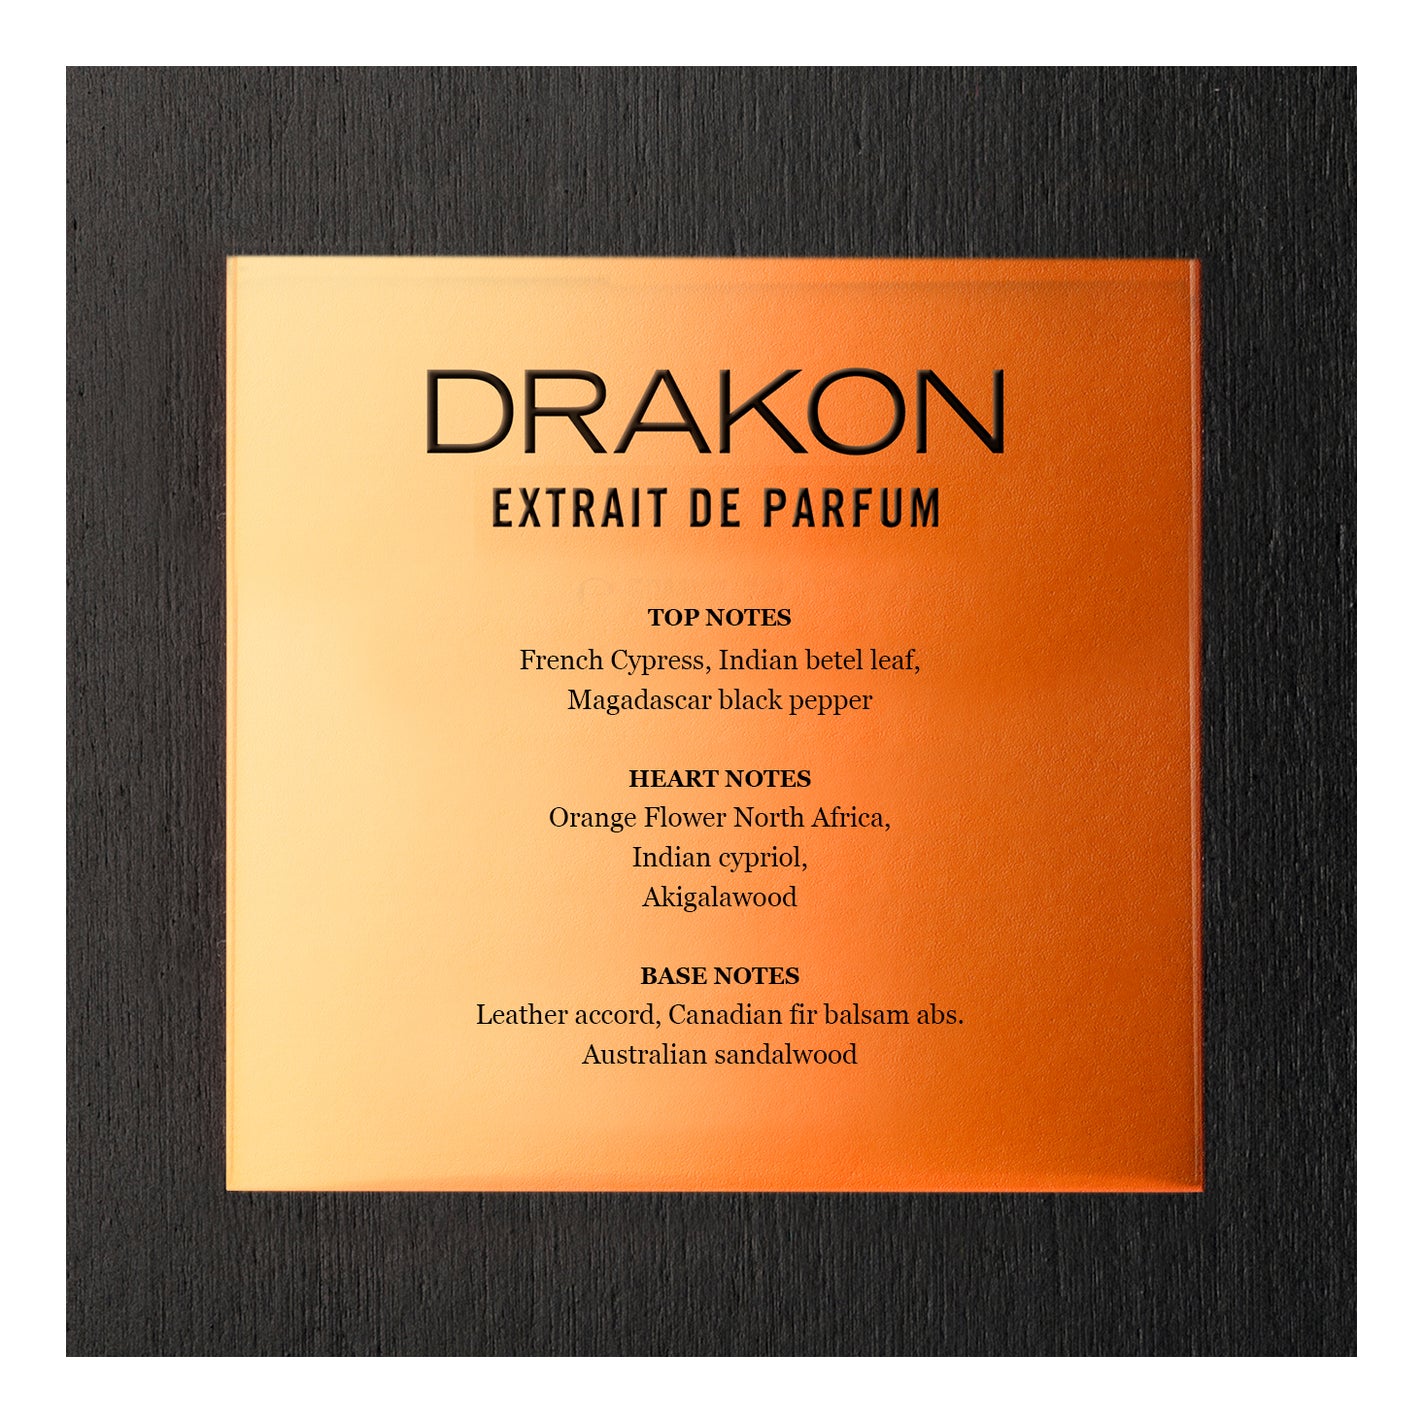 CARNER BARCELONA Drakon Extrait de Parfum - 50ml